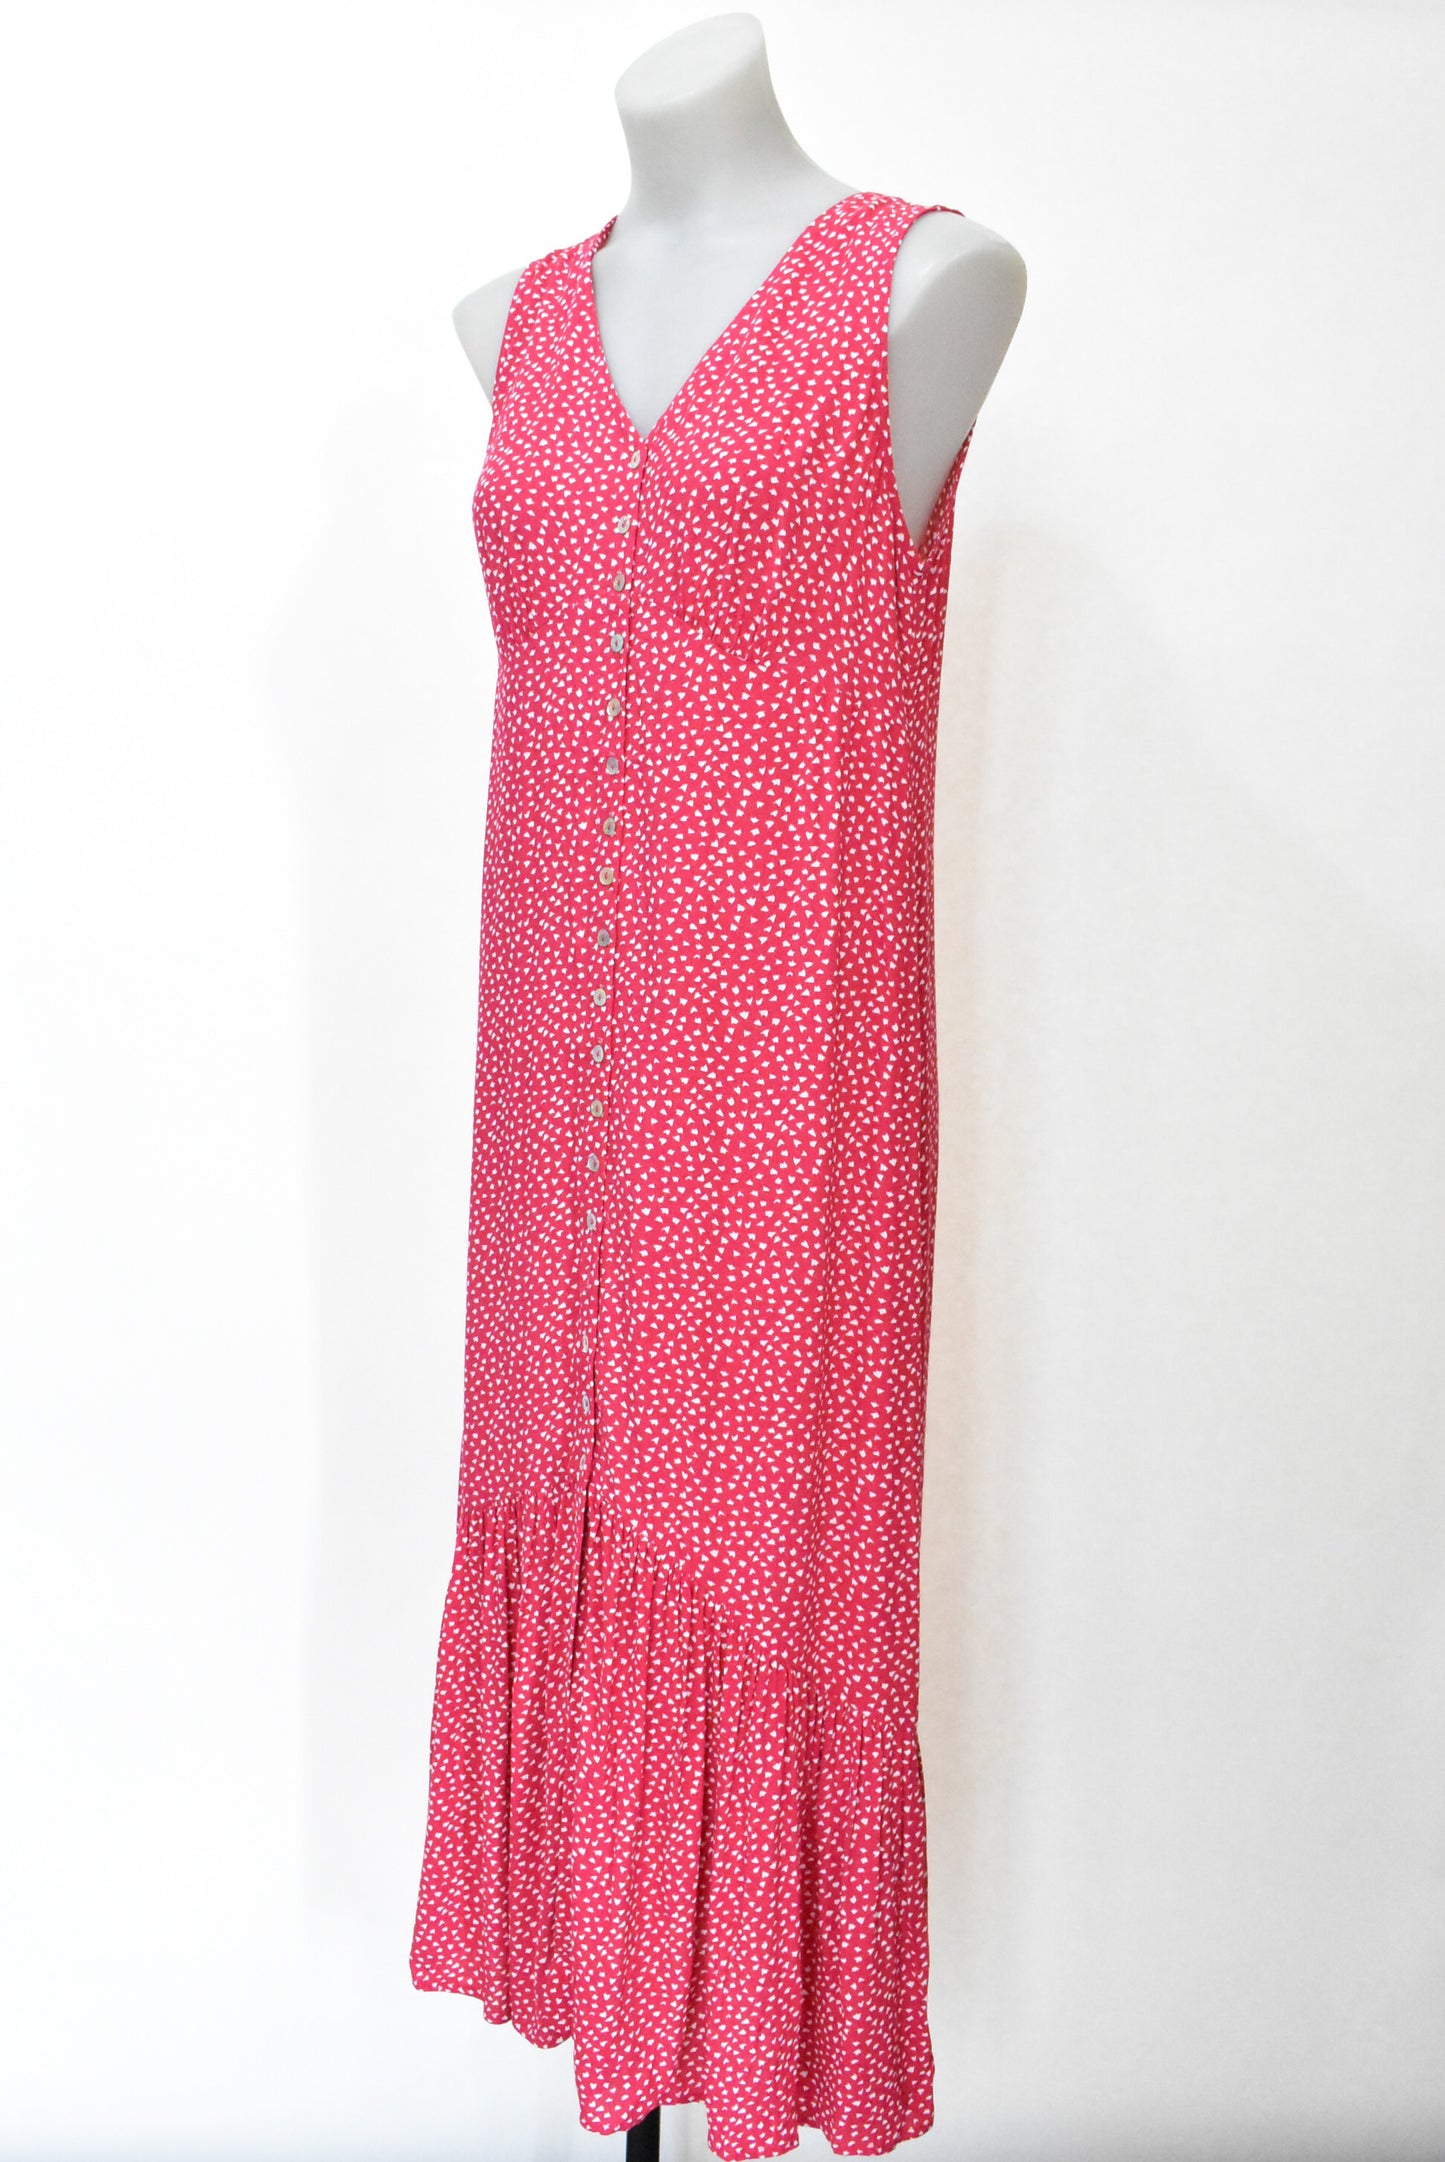 Emerge pink maxi dress, 8